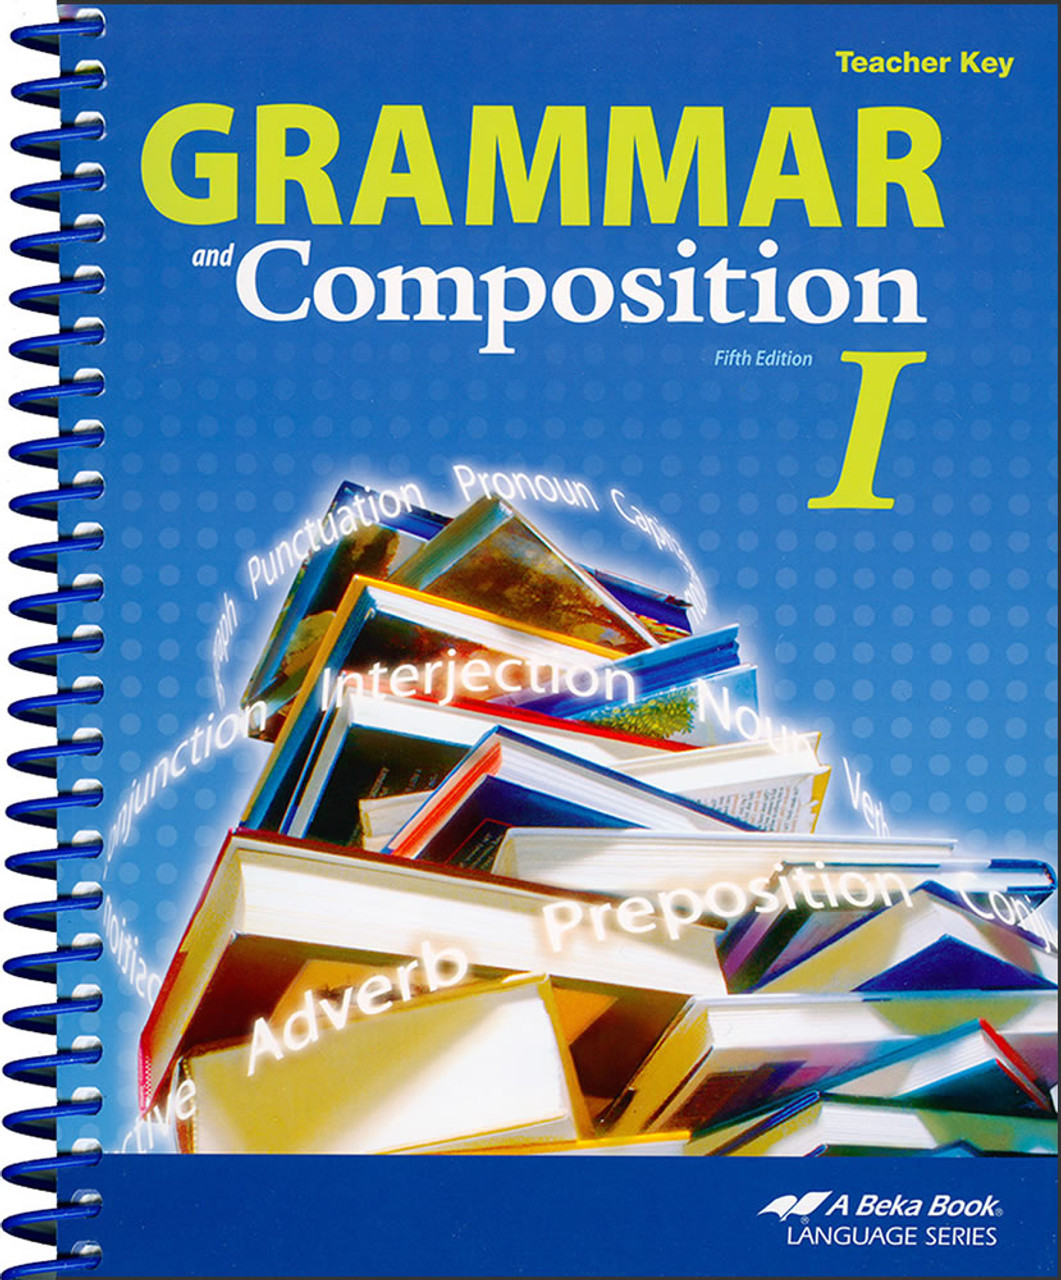 Grammar and Composition I, 5th edition - Teacher Key